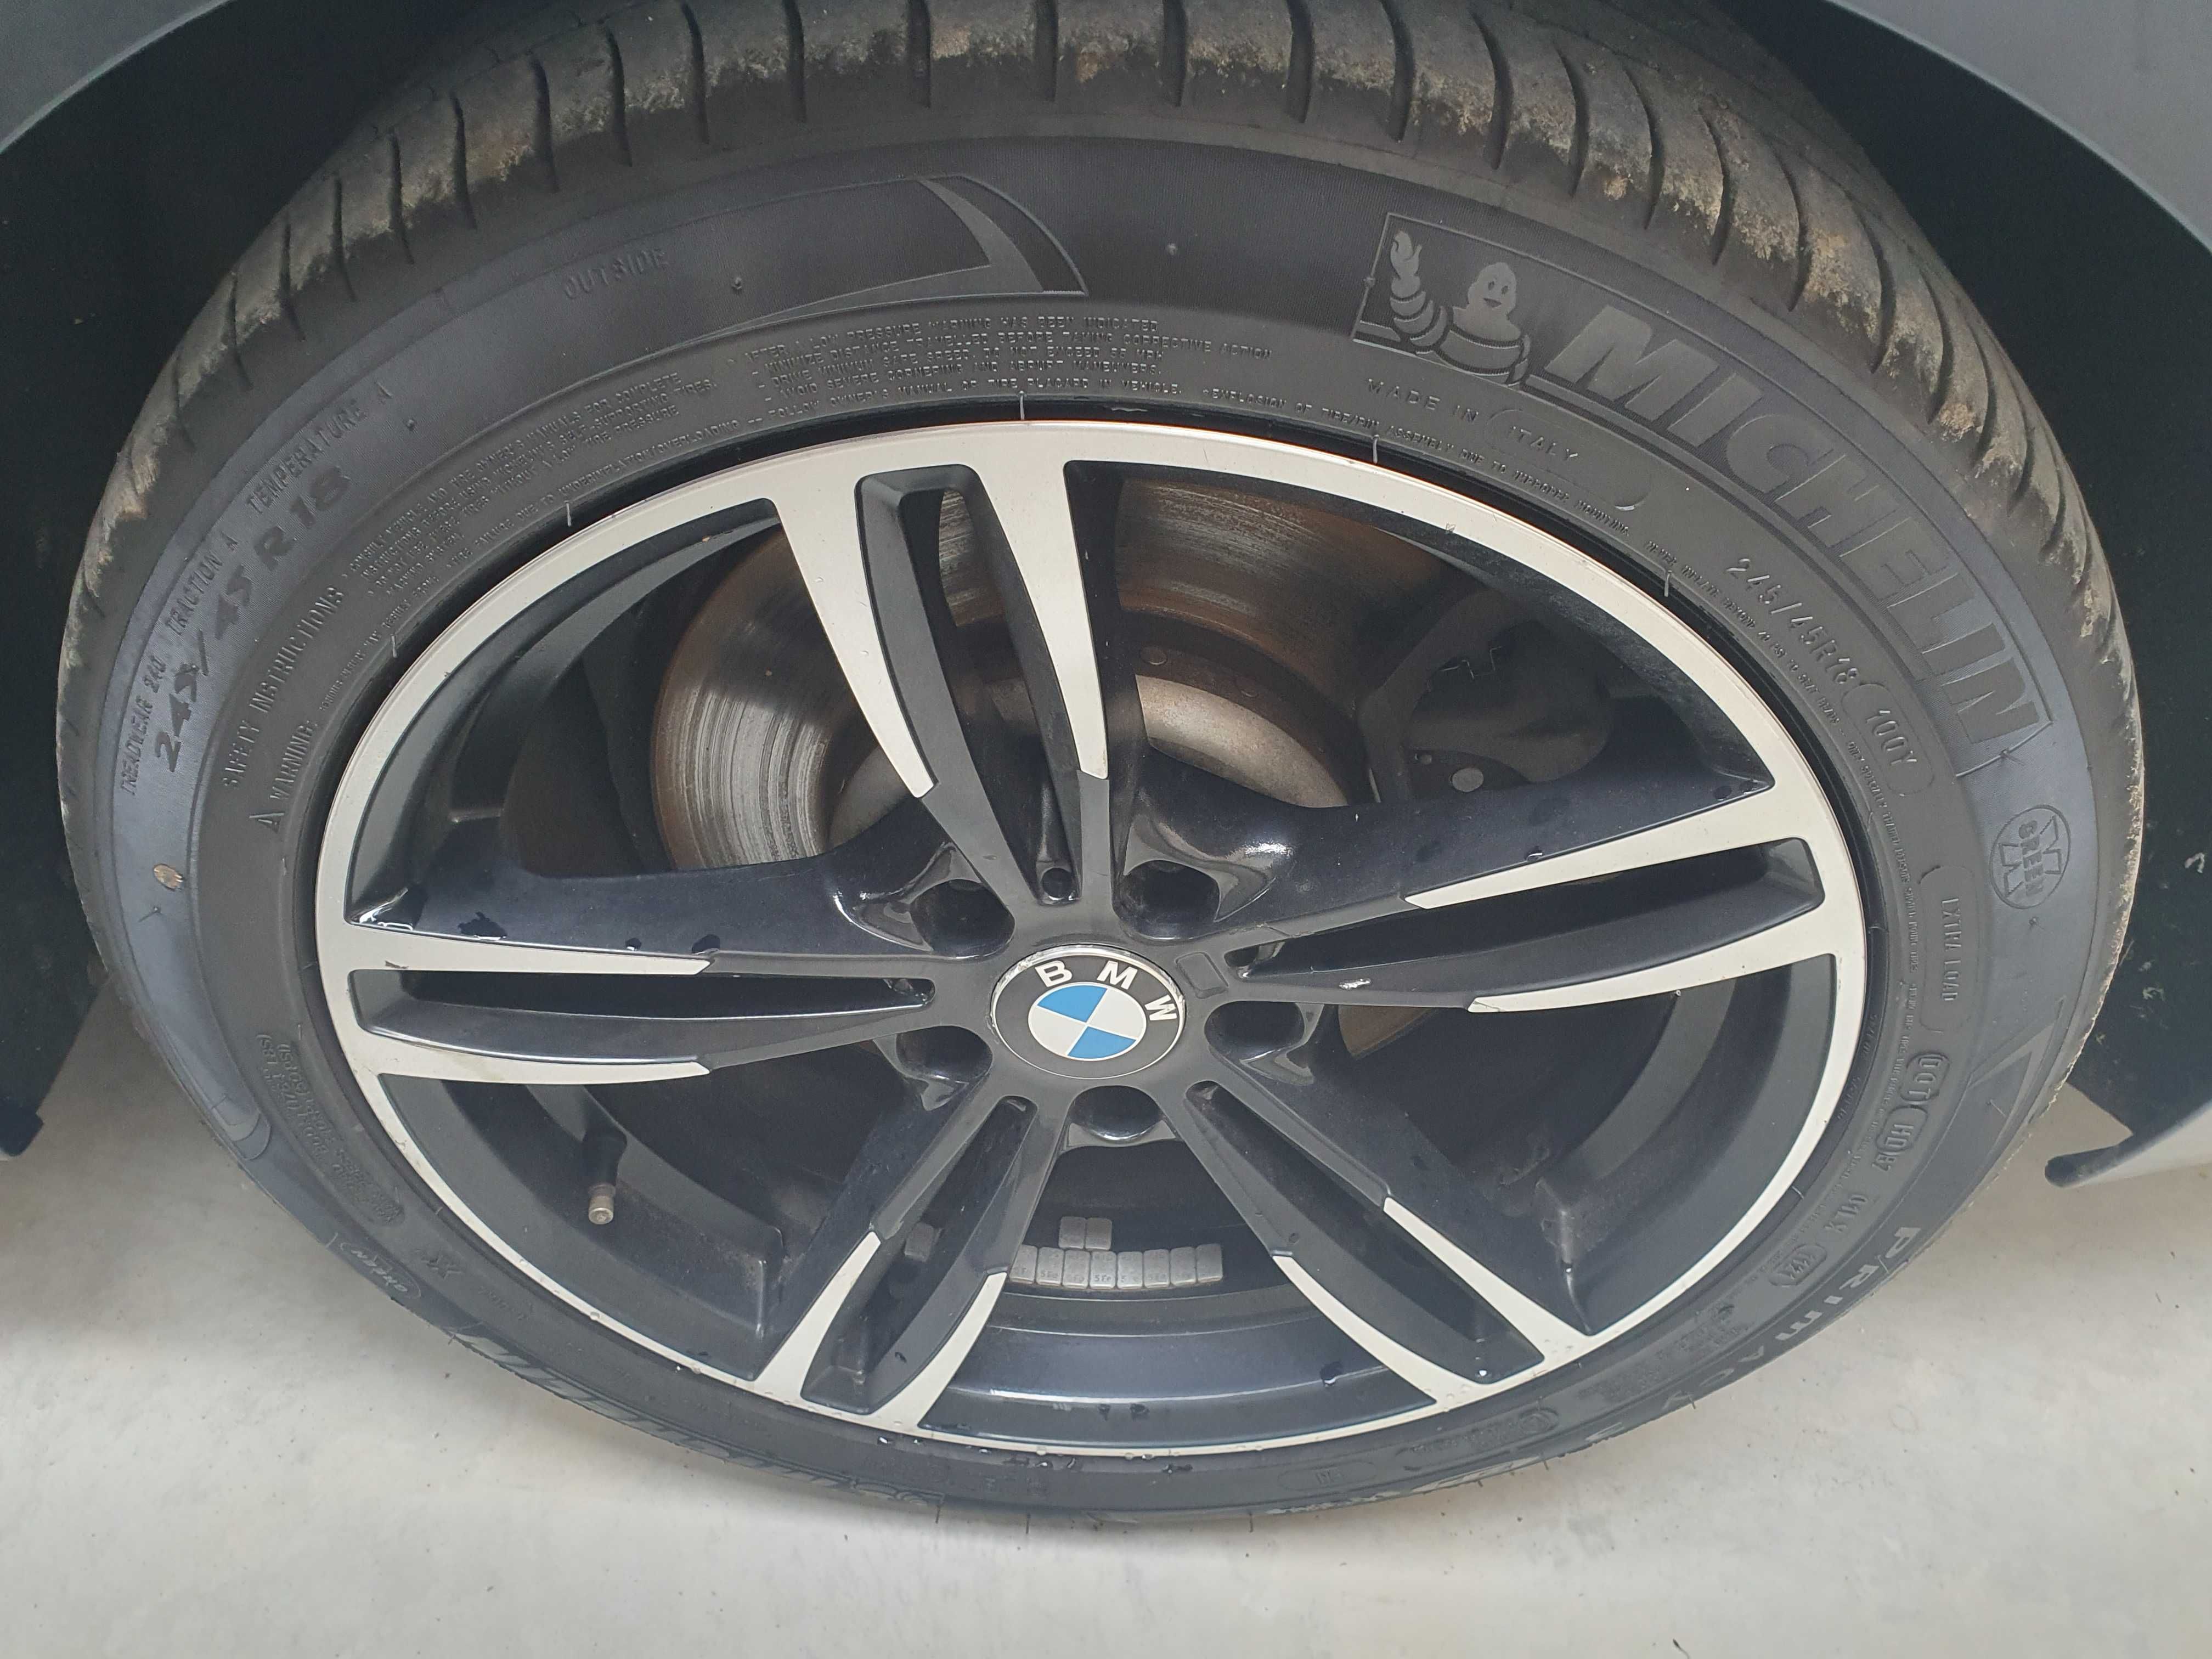 BMW F11 535dx facelift 313кс 4X4 - 2014г. на части